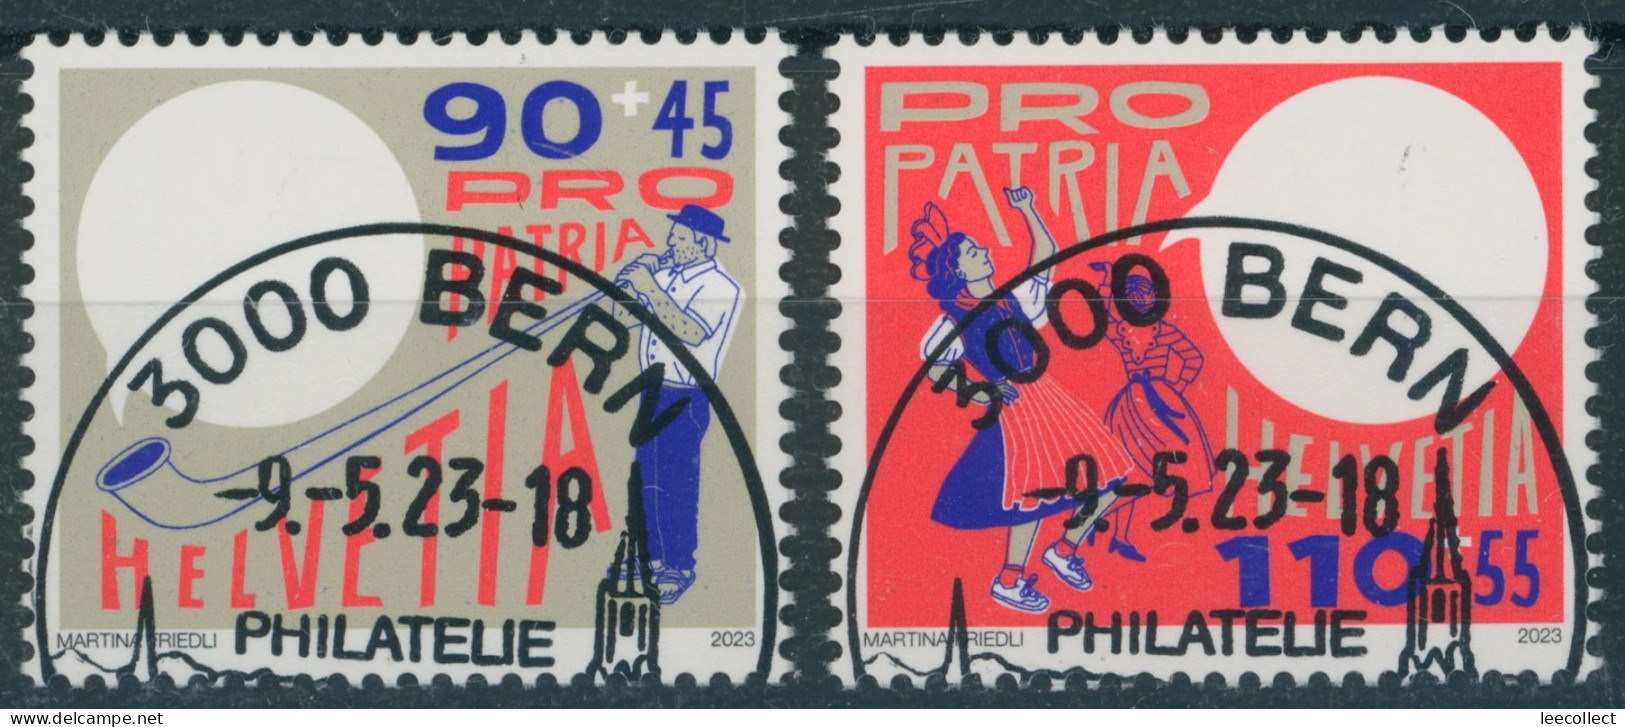 Suisse - 2023 - Pro Patria - Ersttag Stempel ET - Used Stamps